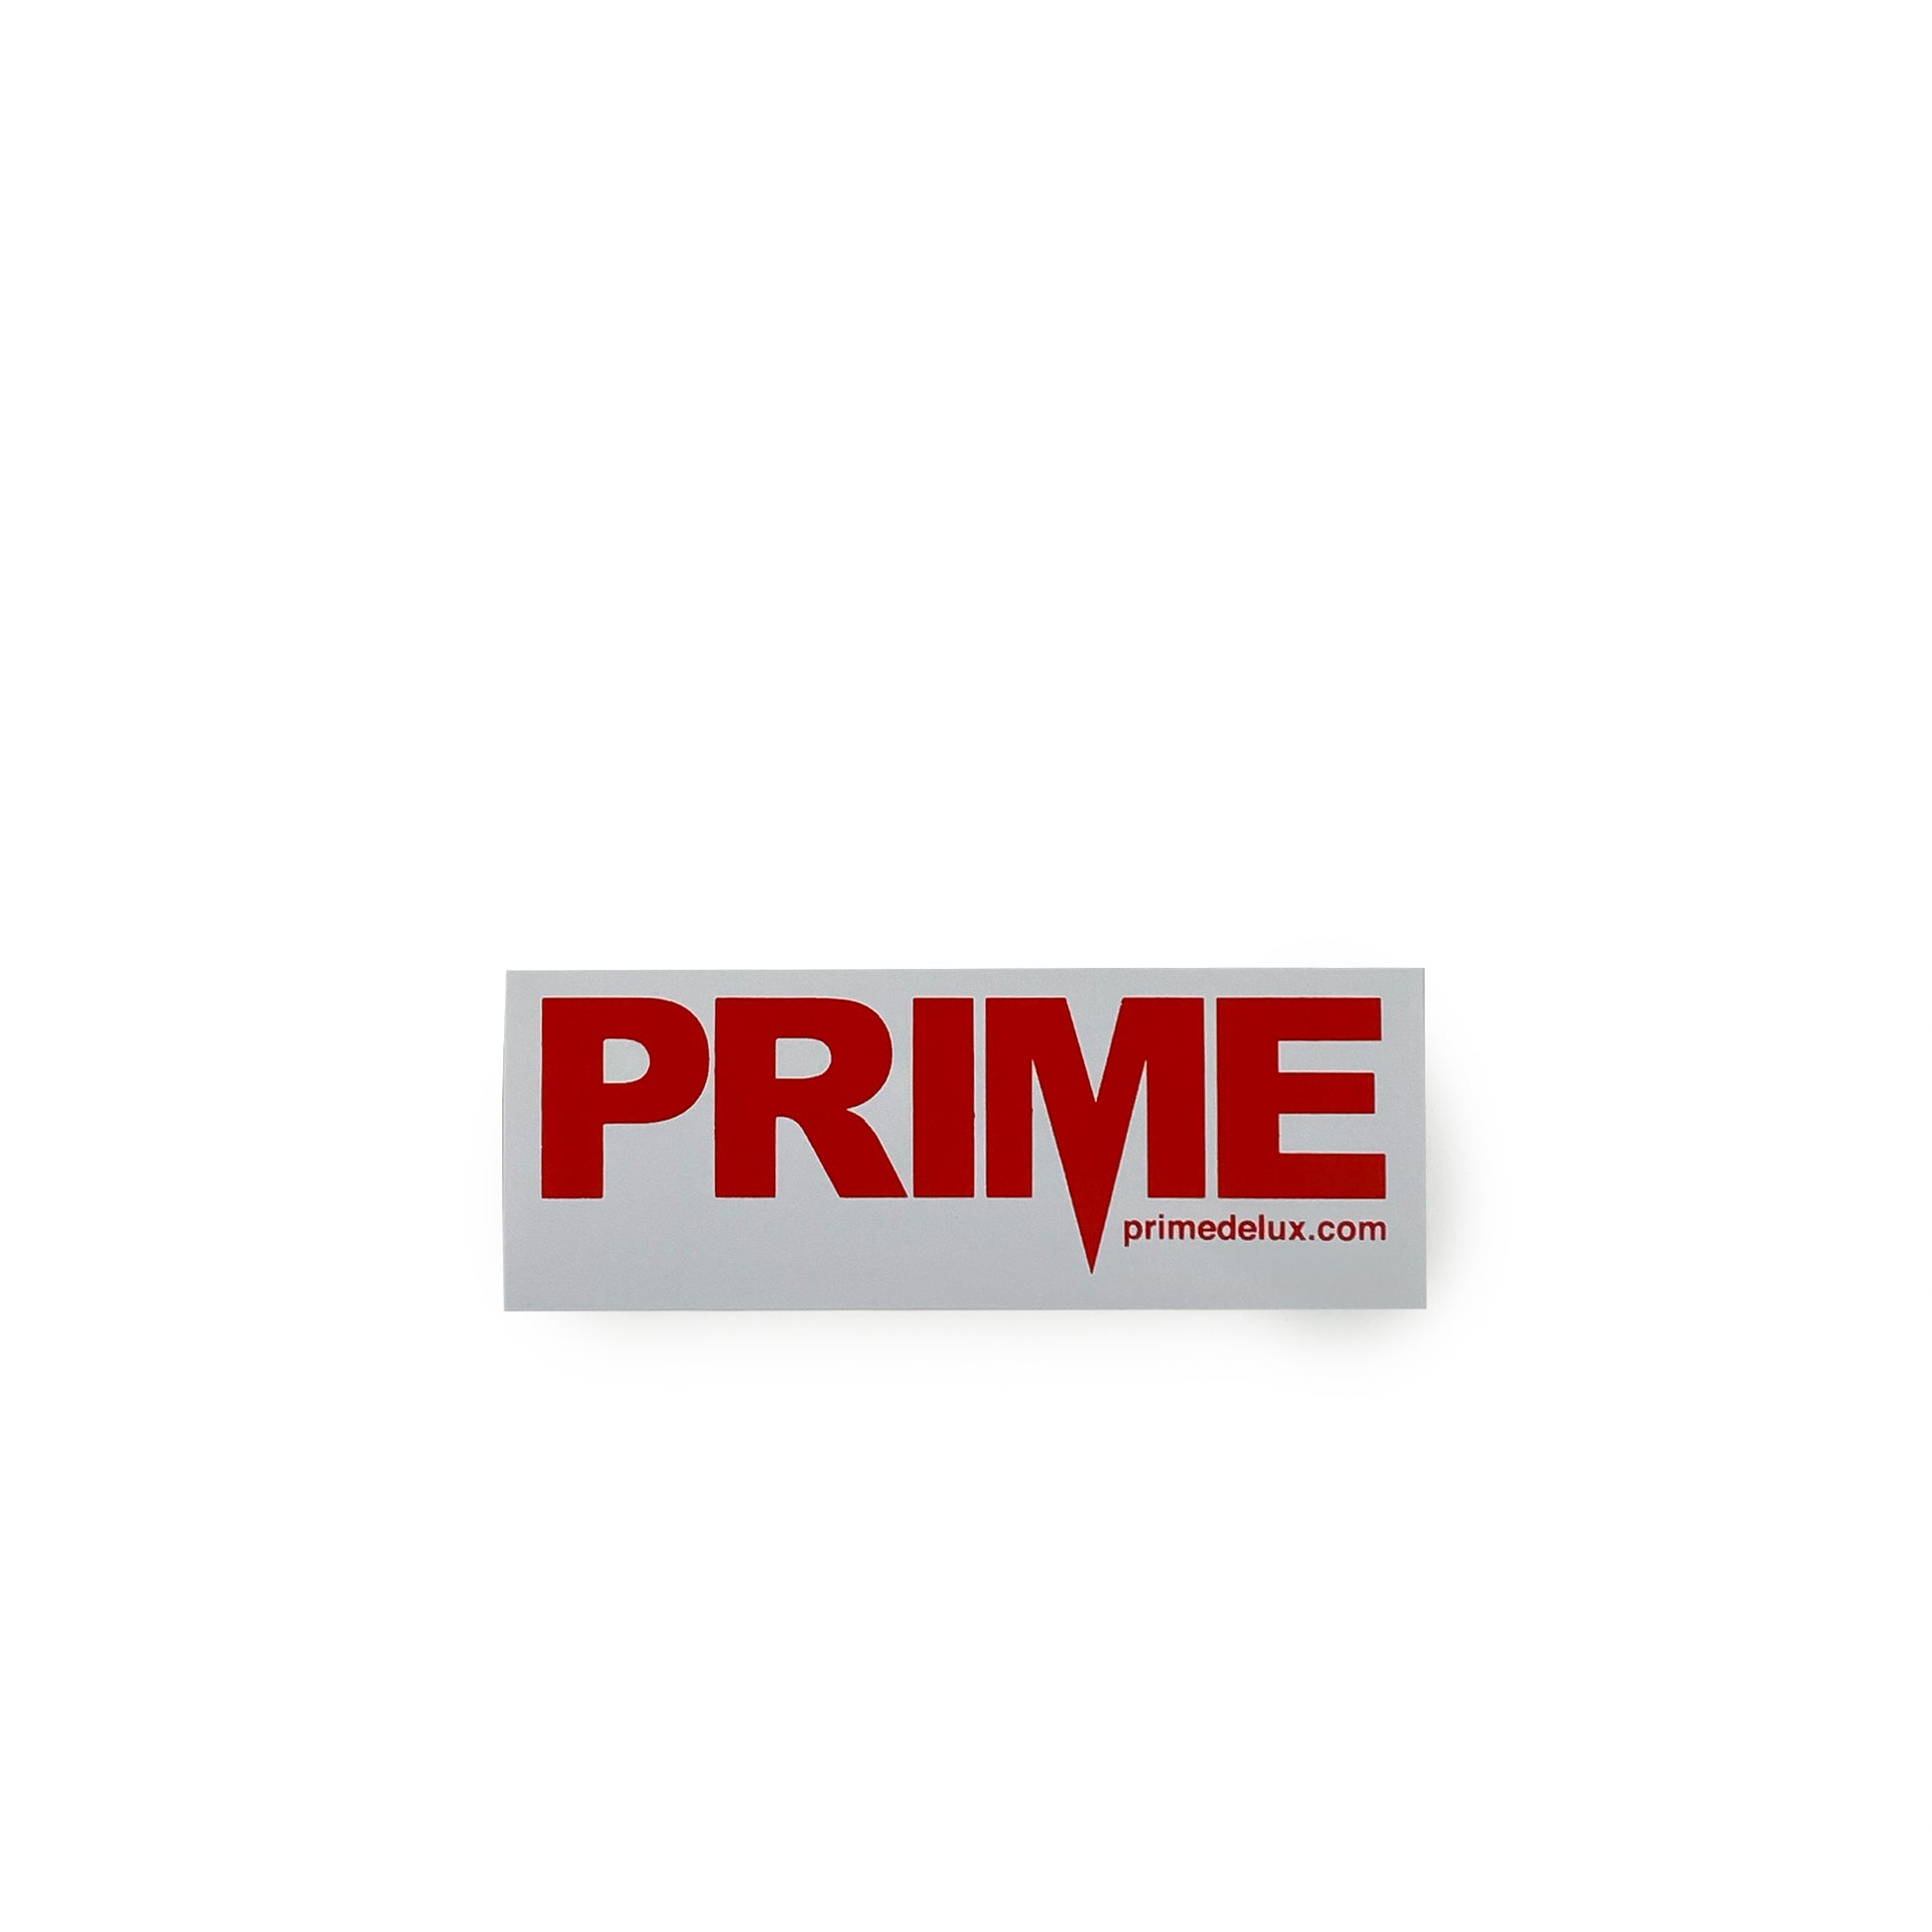 Prime Delux OG Sticker M - Red / White - Prime Delux Store